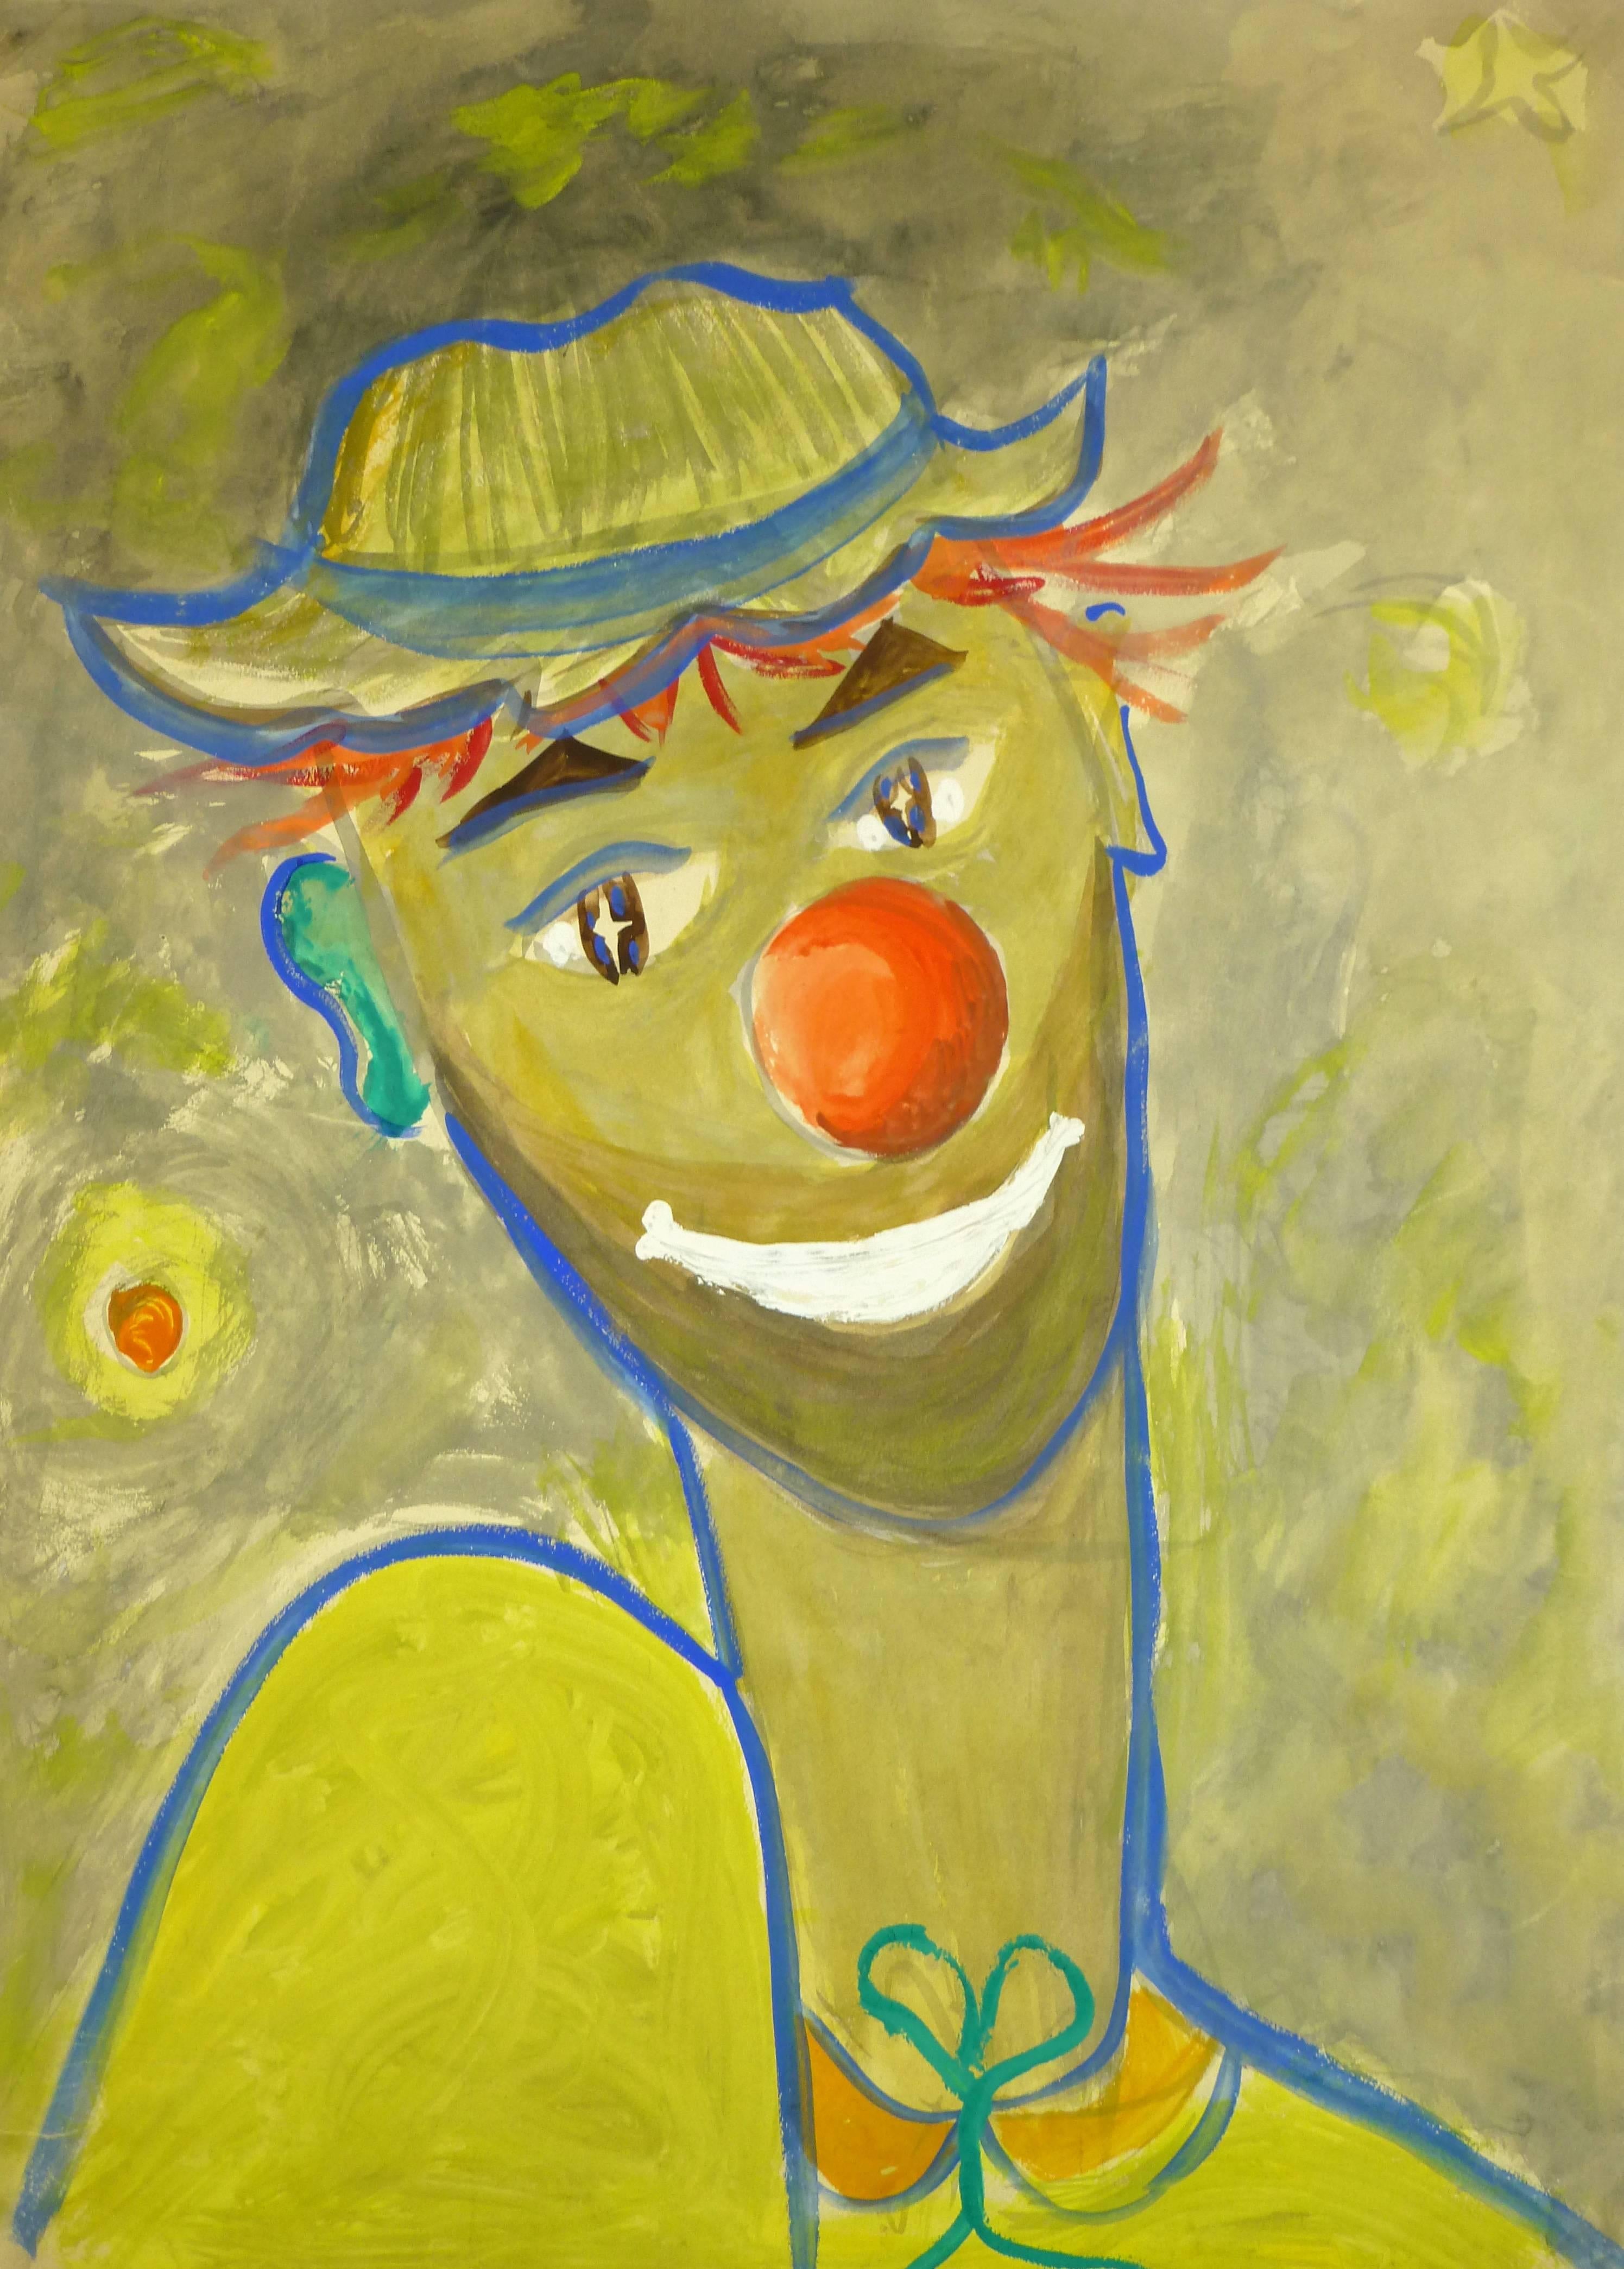 Unknown Portrait - Clown in Yellow